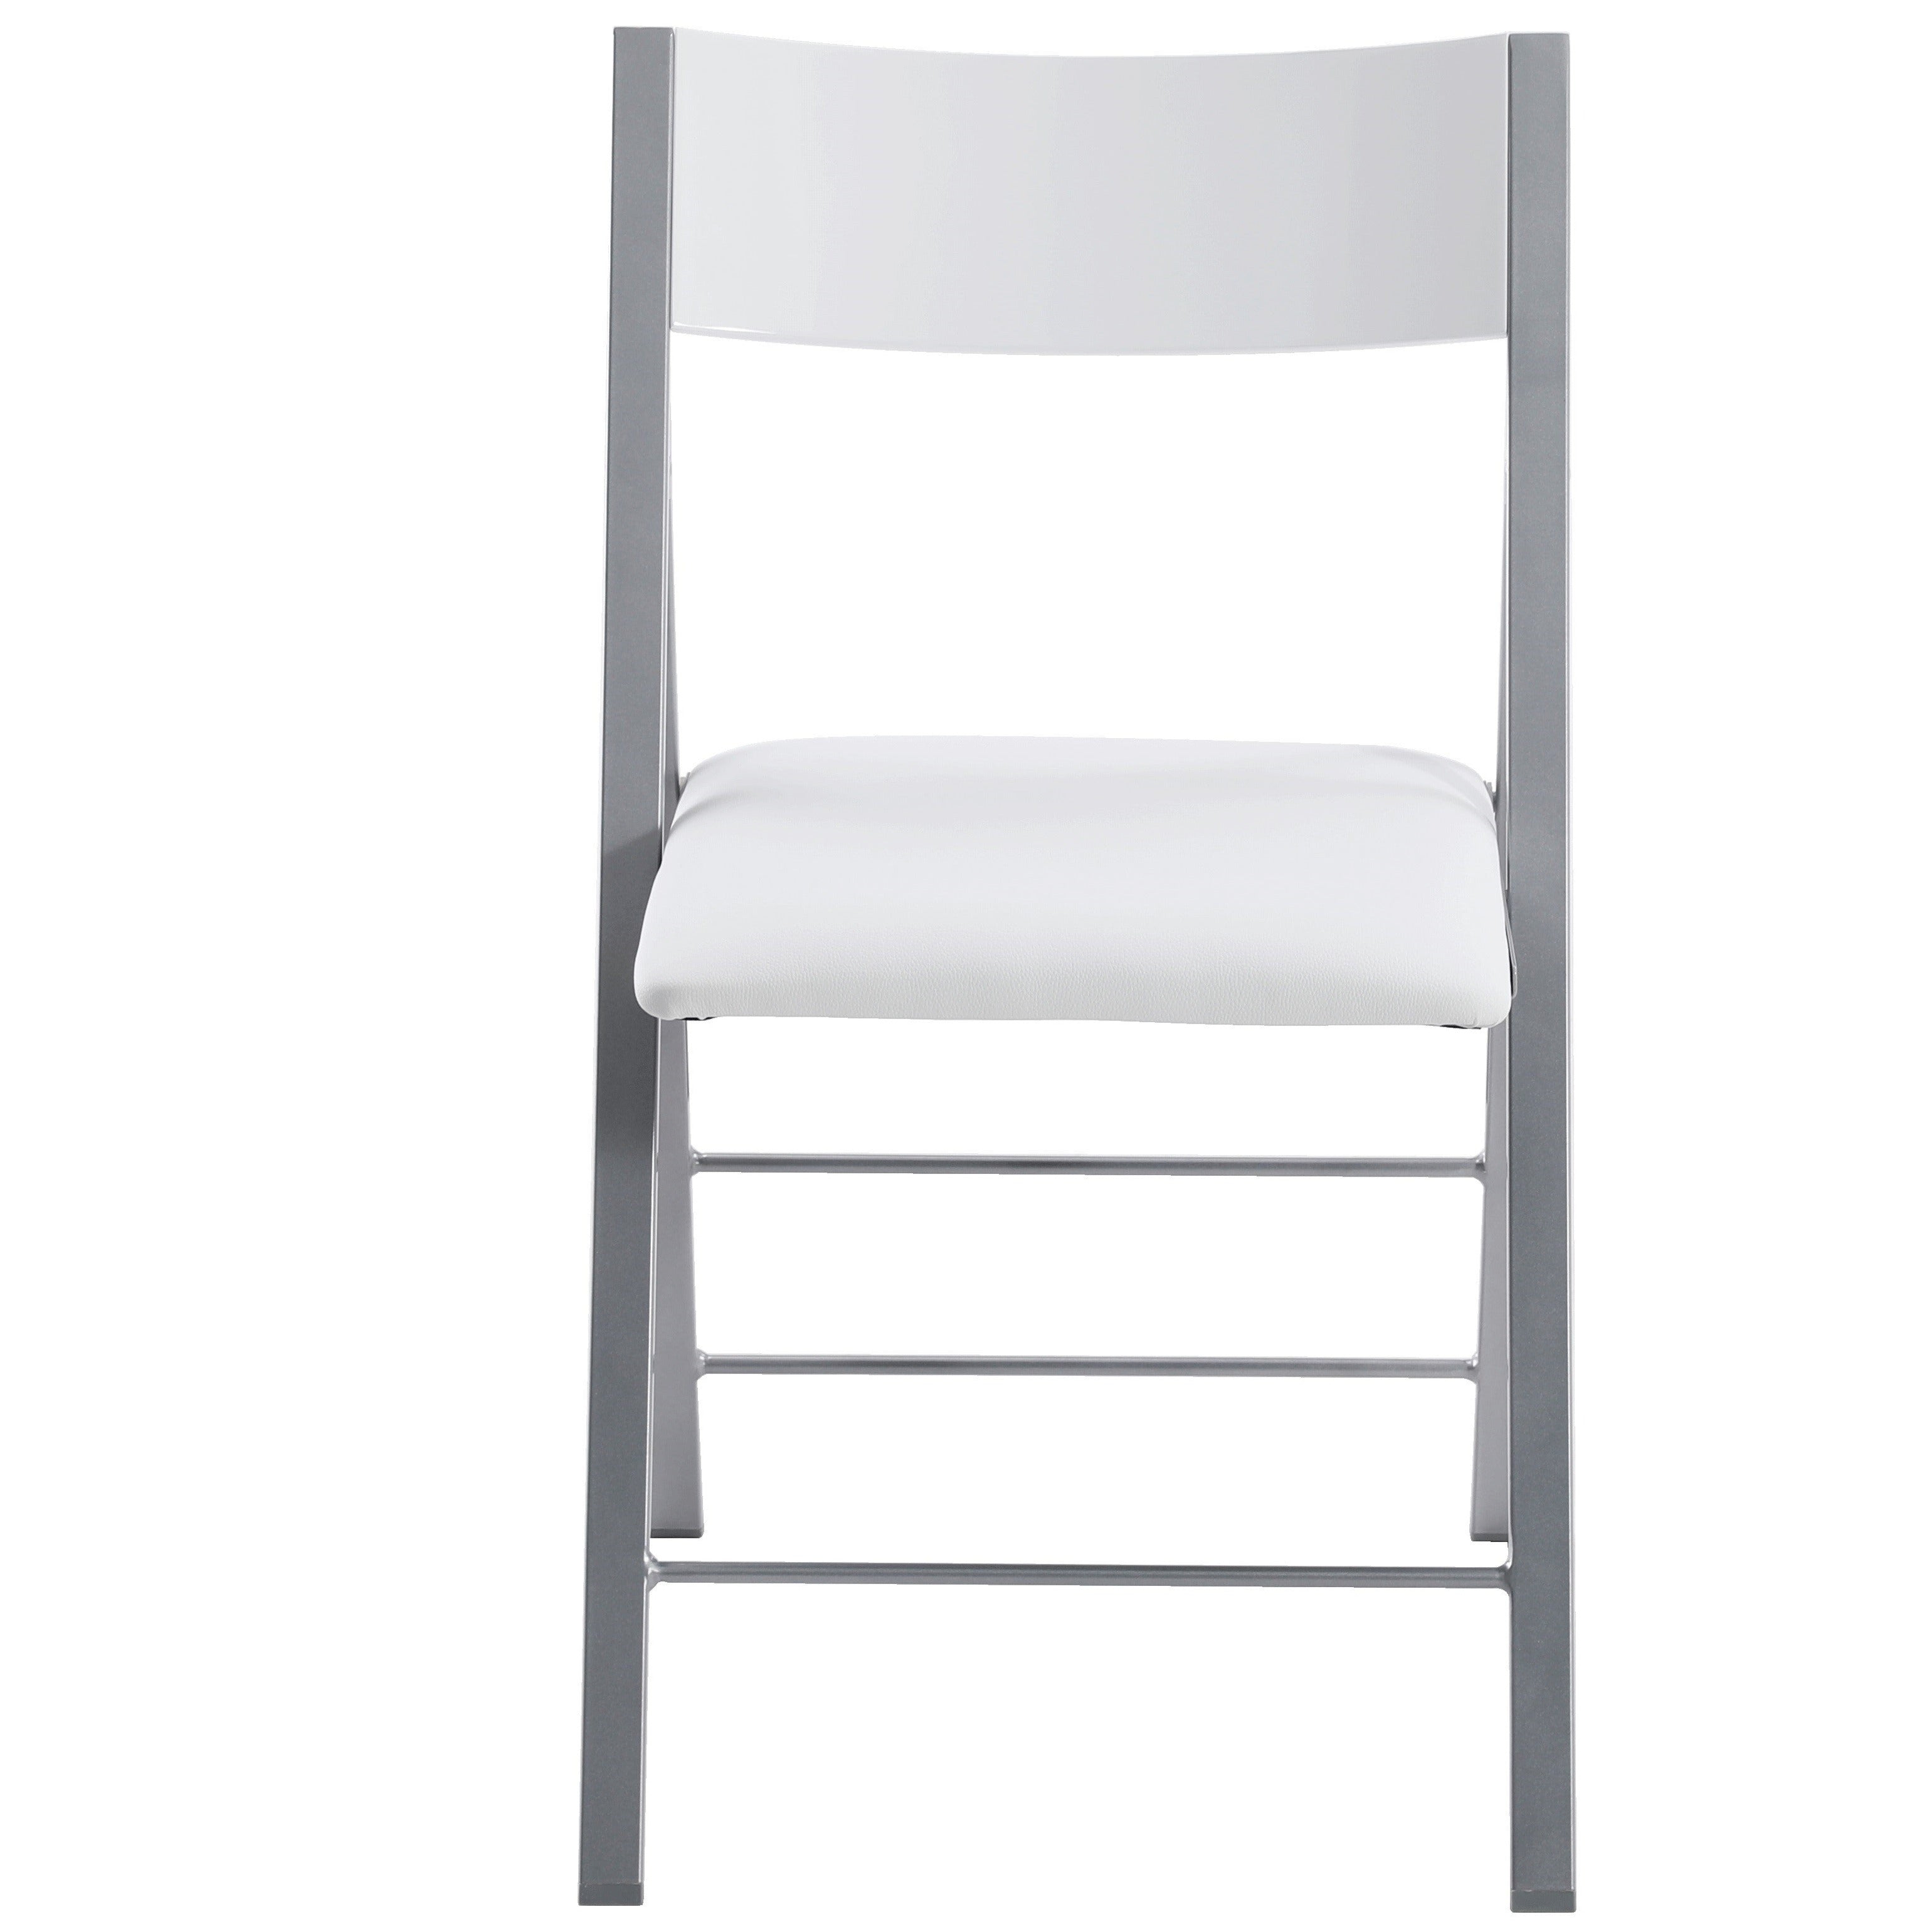 Foldees Chicago model folding chair, silver metal frame, white PU leather padded seat, white wood rounded backrest,  designer folding chair כסא מתקפל מעוצב מסגרת צבע כסף ומושב דמוי עור לבן